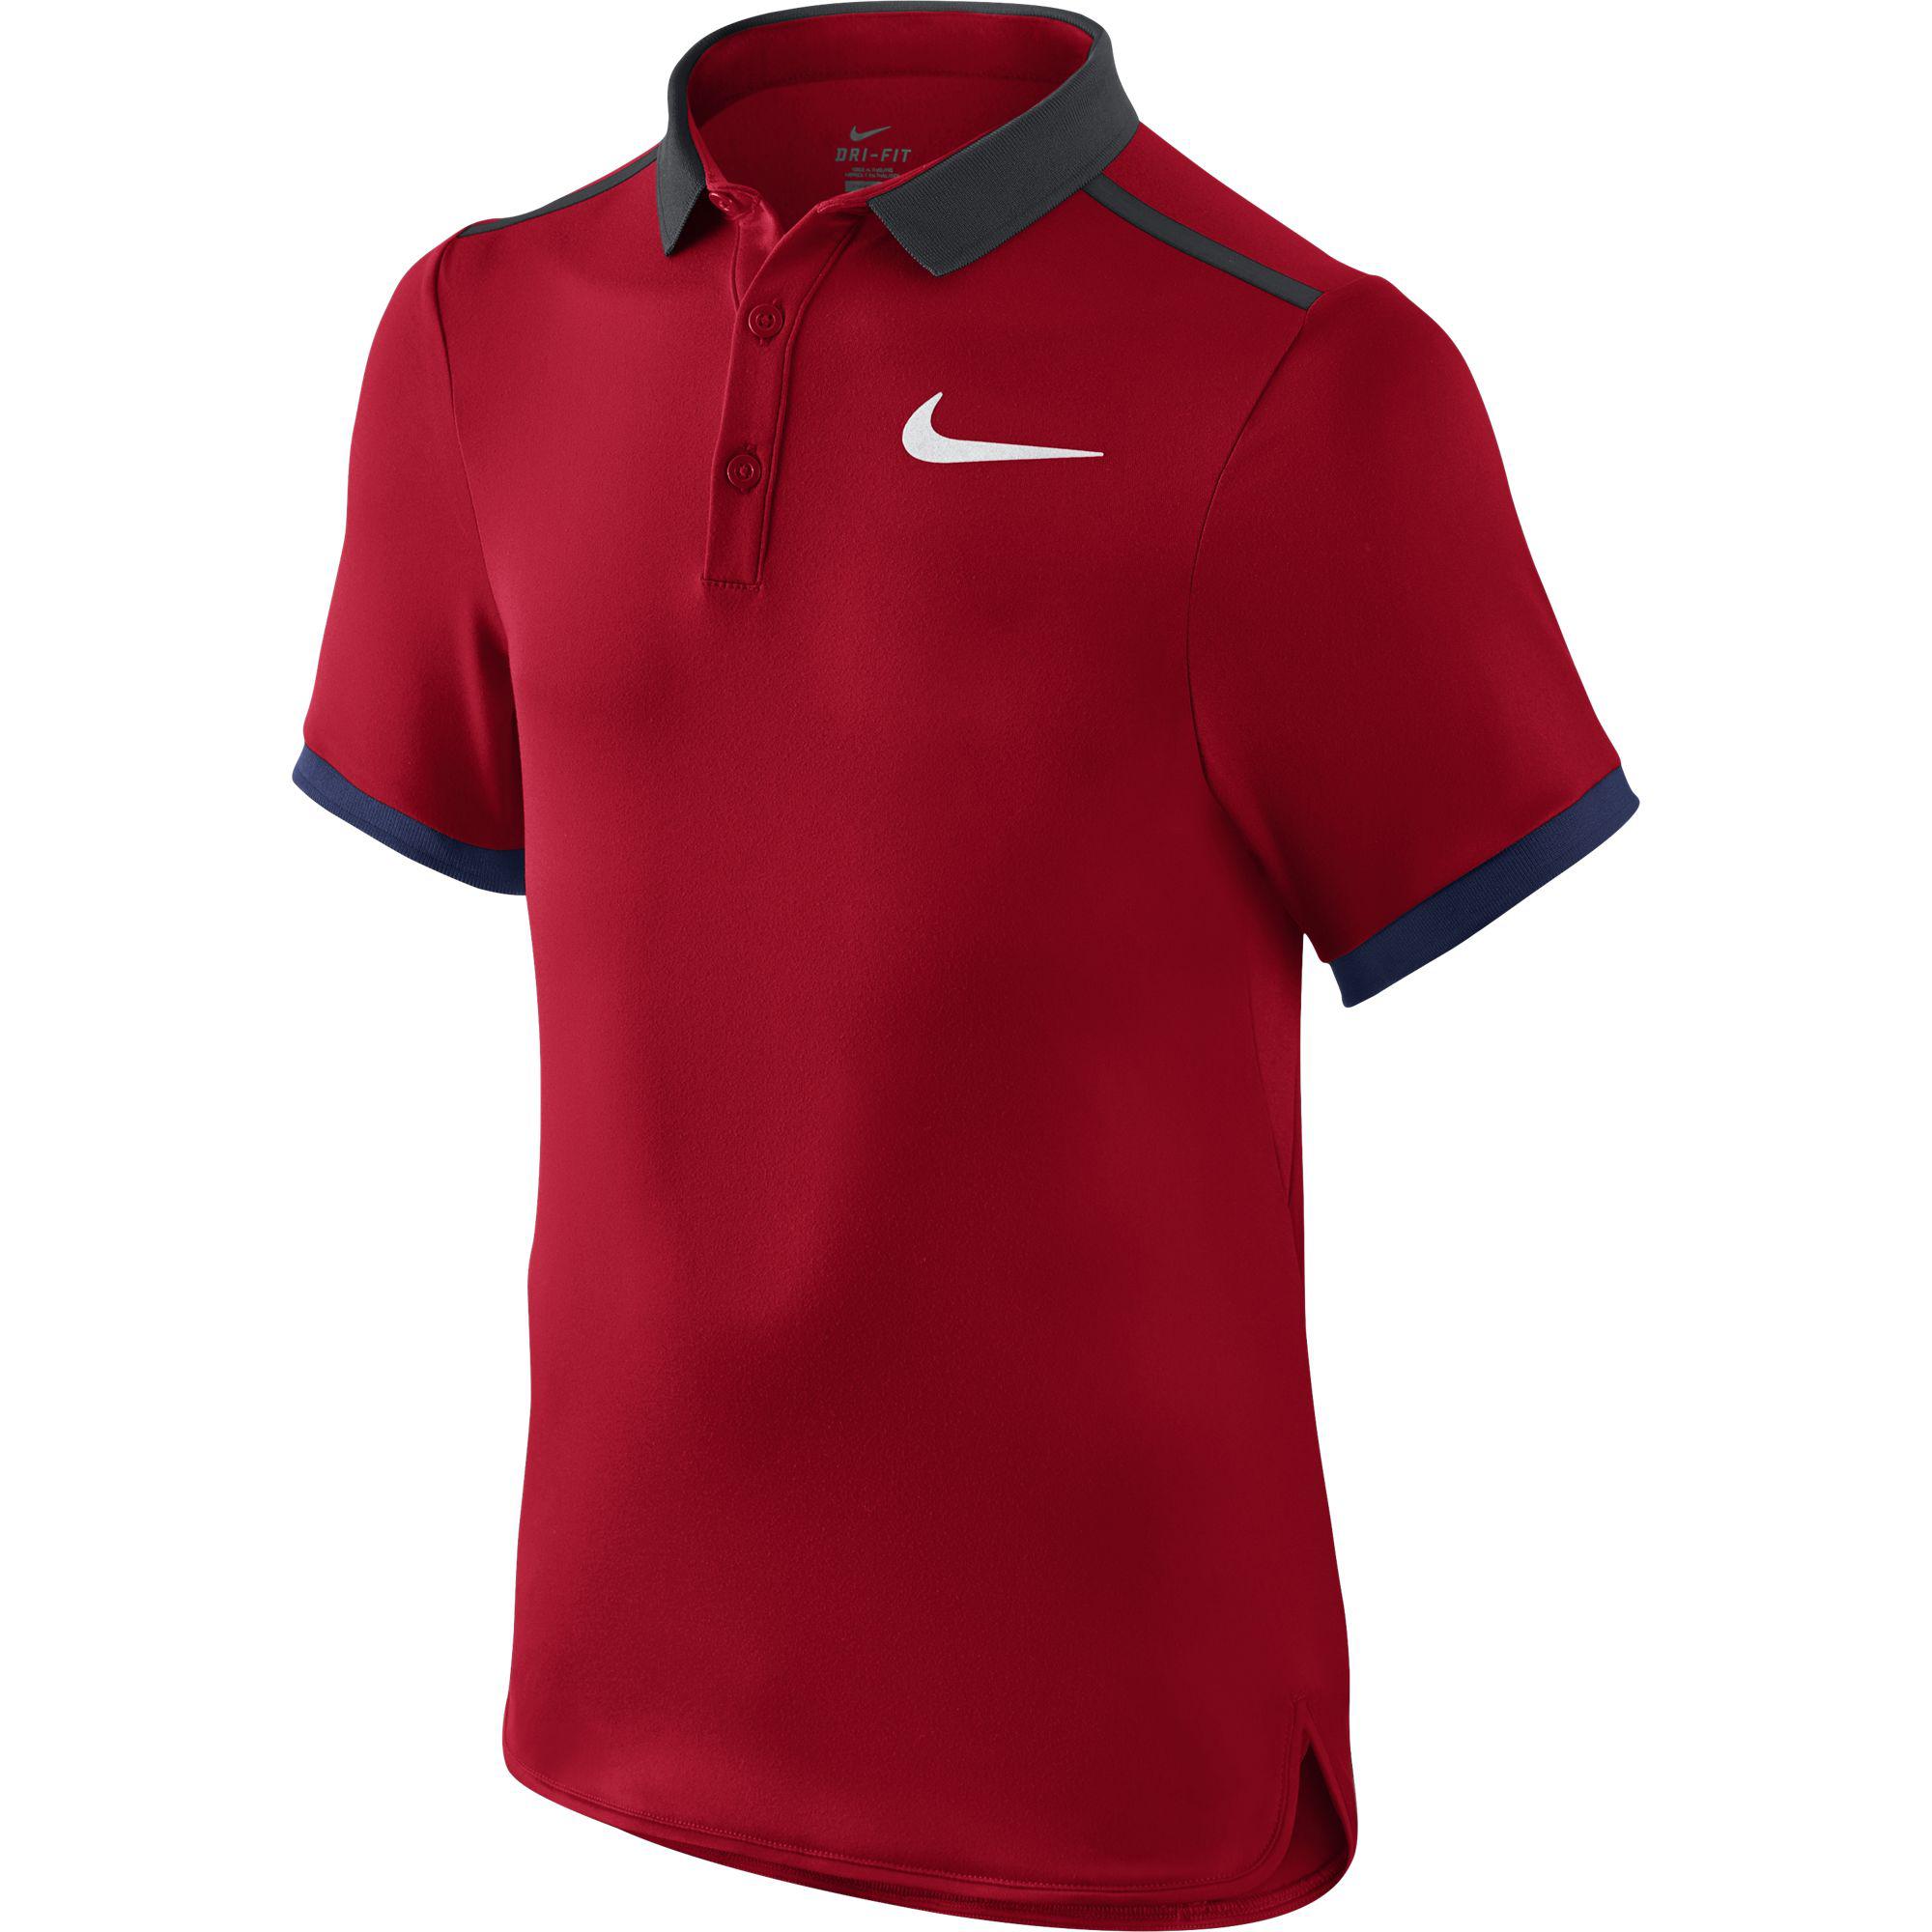 Nike Boys Advantage Solid Polo - University Red/Anthracite - Tennisnuts.com